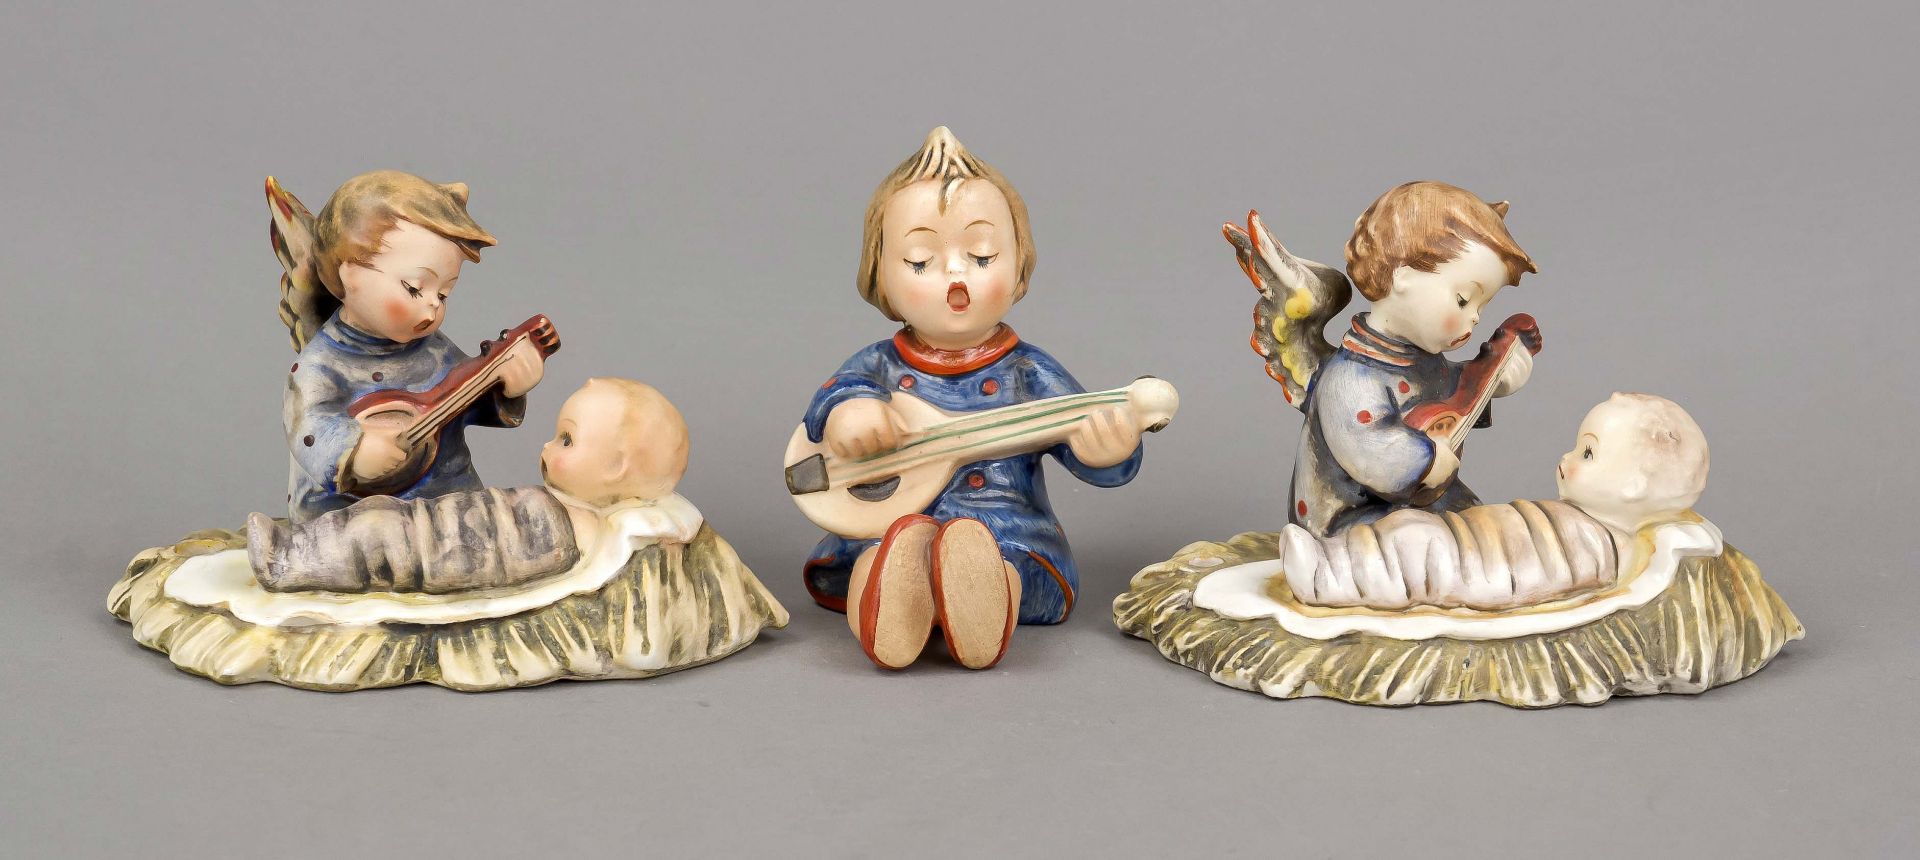 Three Hummel figures, Goebel, Oeslau, marks 1939-1950, 2 times lullaby, model no. Hum 24/1, design